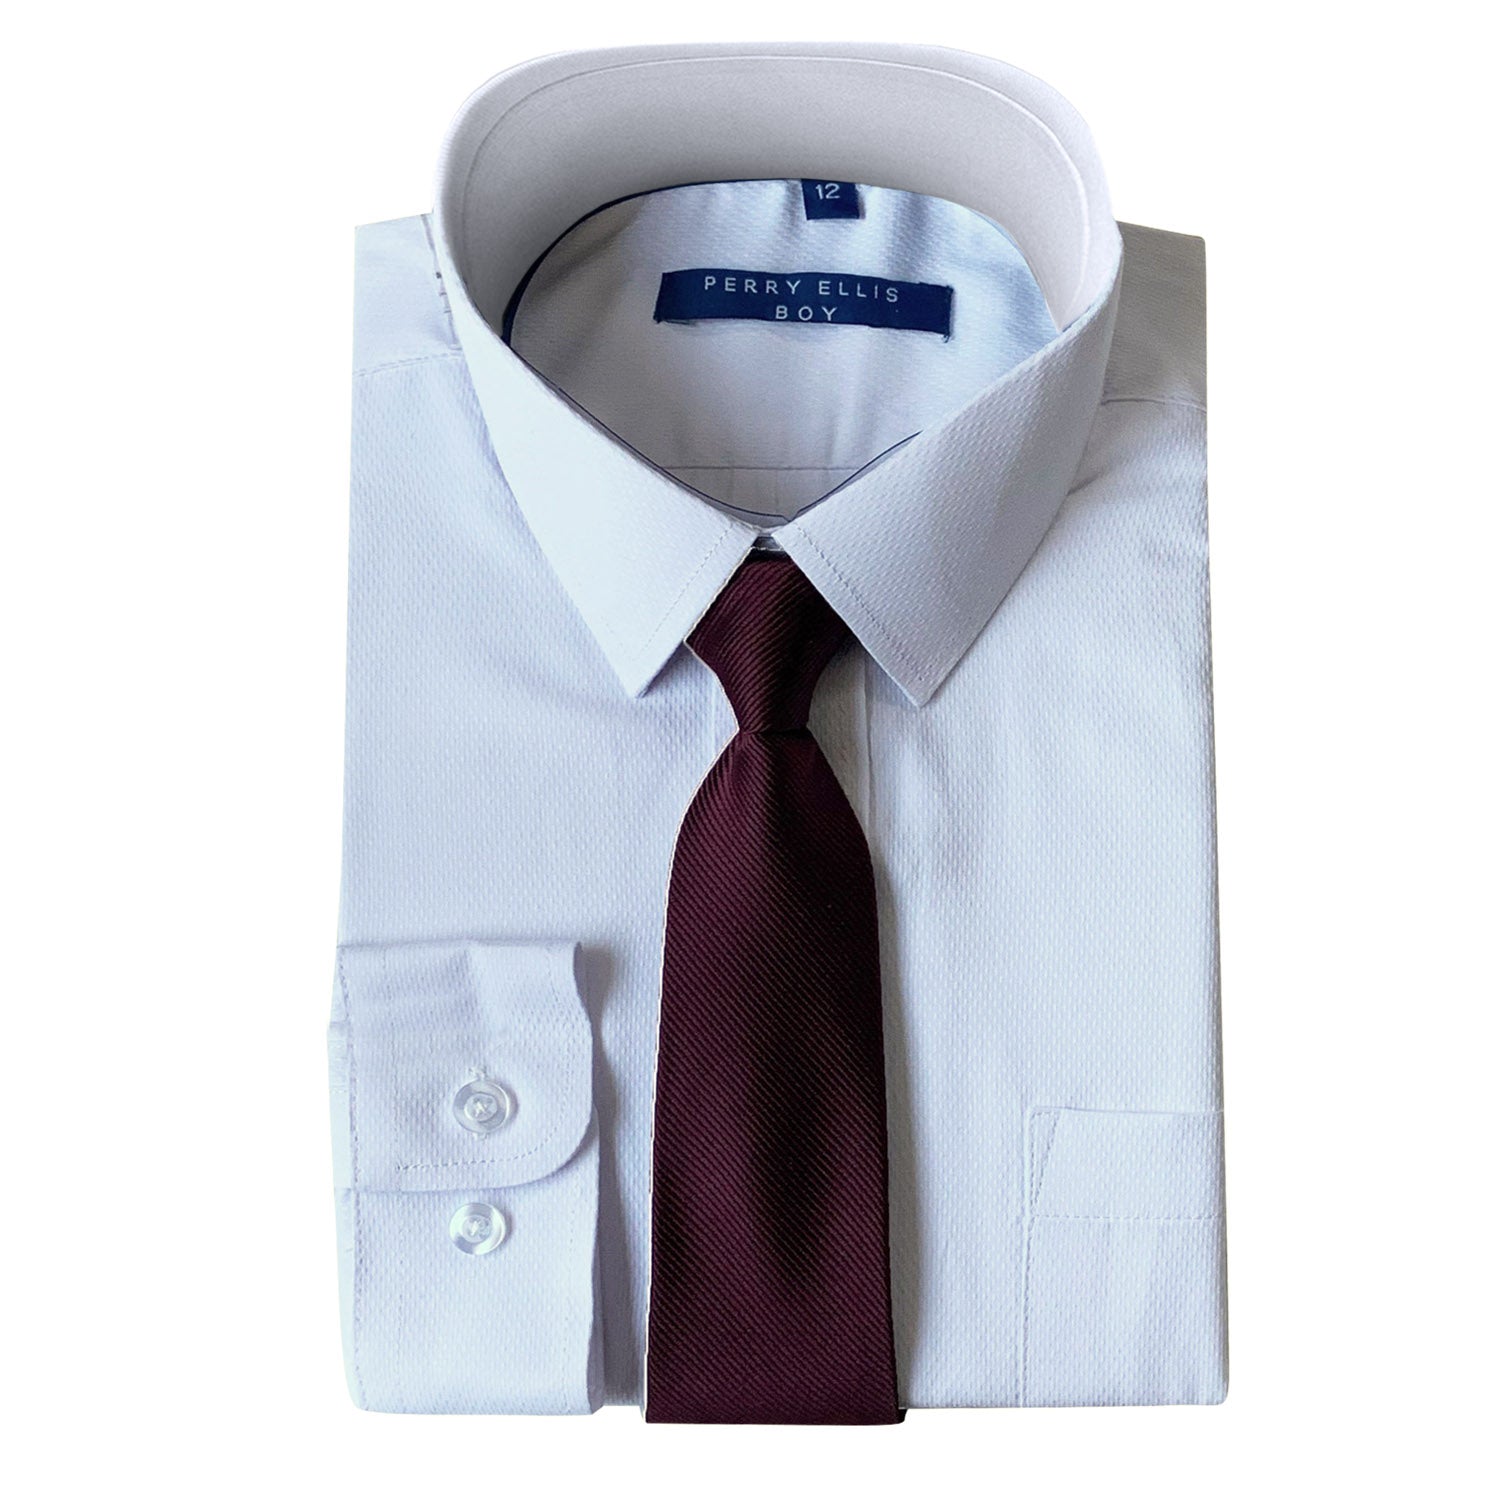 Perry Ellis Boys Dress Shirts w Burgundy Tie Solid Shirts w Colored Tie